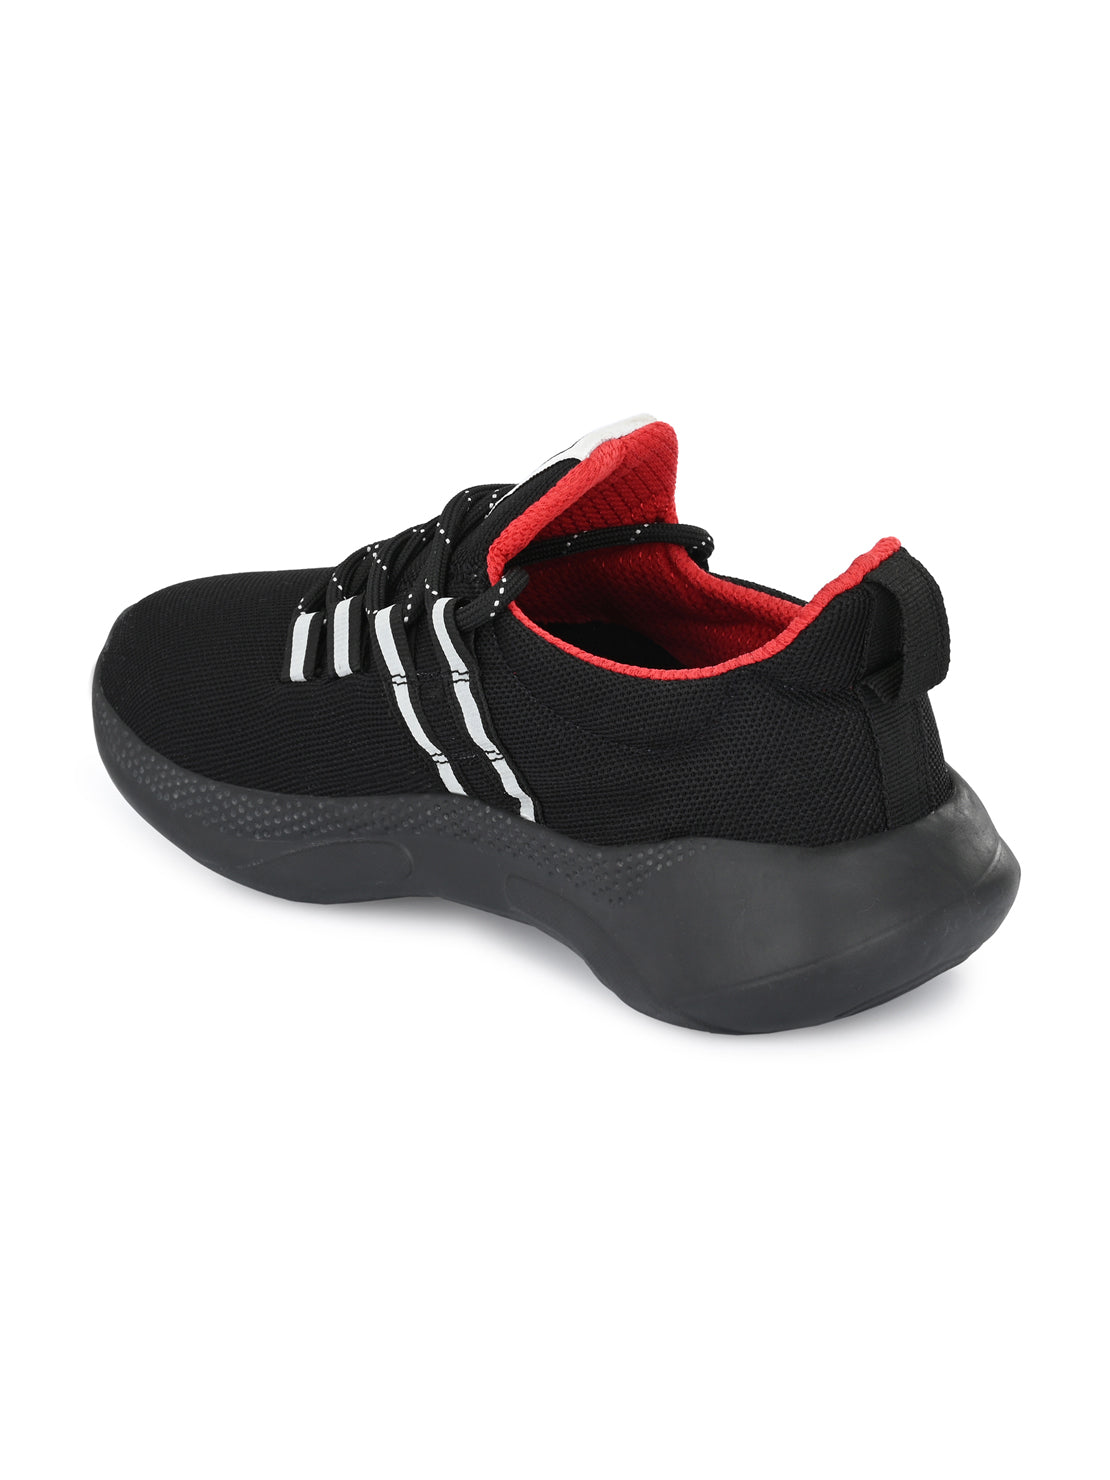 Hirolas® Men's Black Mesh Running/Walking/Gym Lace Up Sport Shoes (HRL2023BLK)